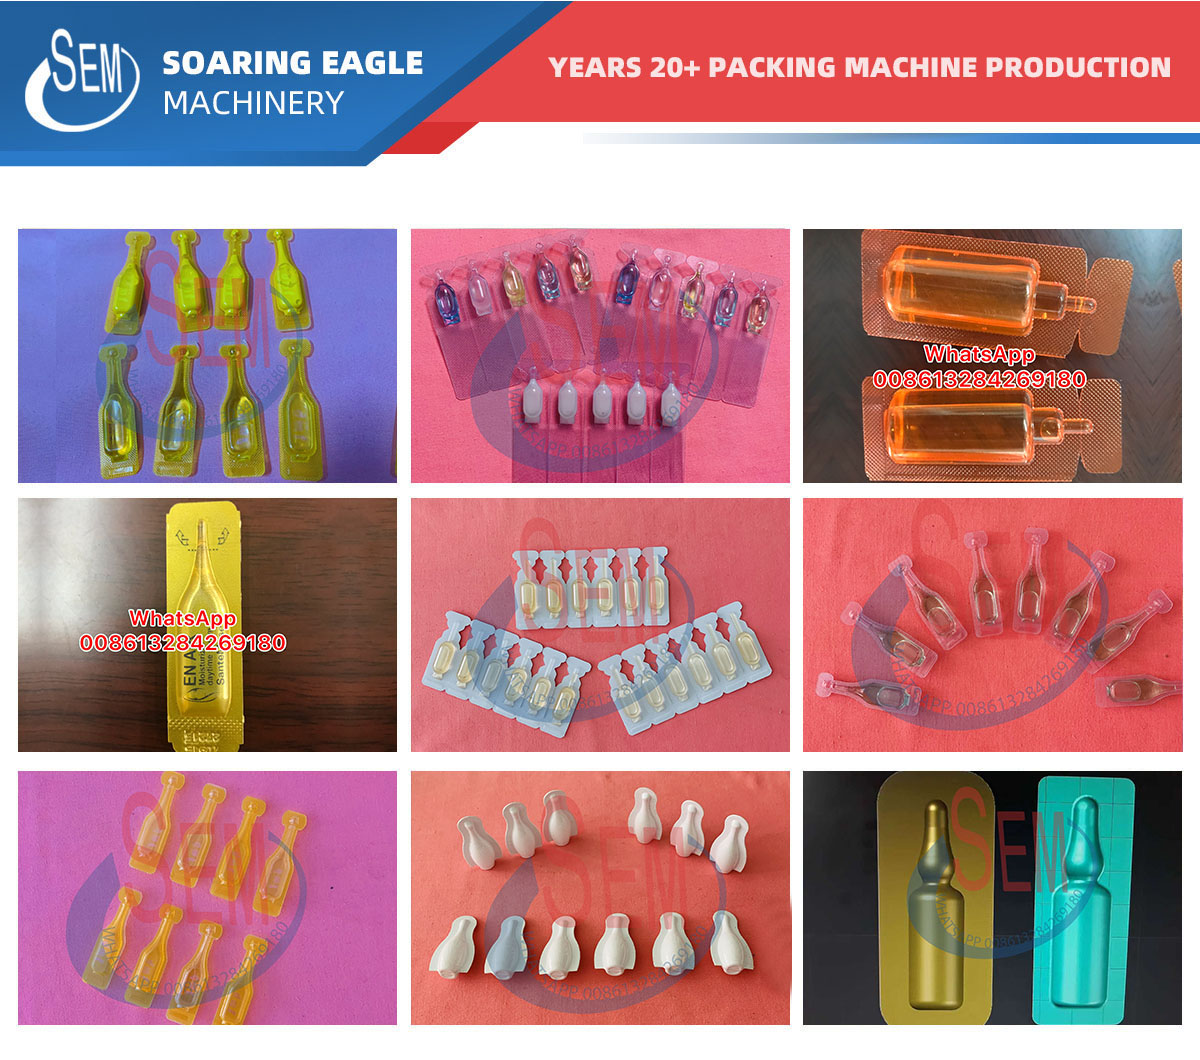 DGS-188N5 High viscosity cosmetic mini dose plastic ampoule vial  packing liquid filling machine